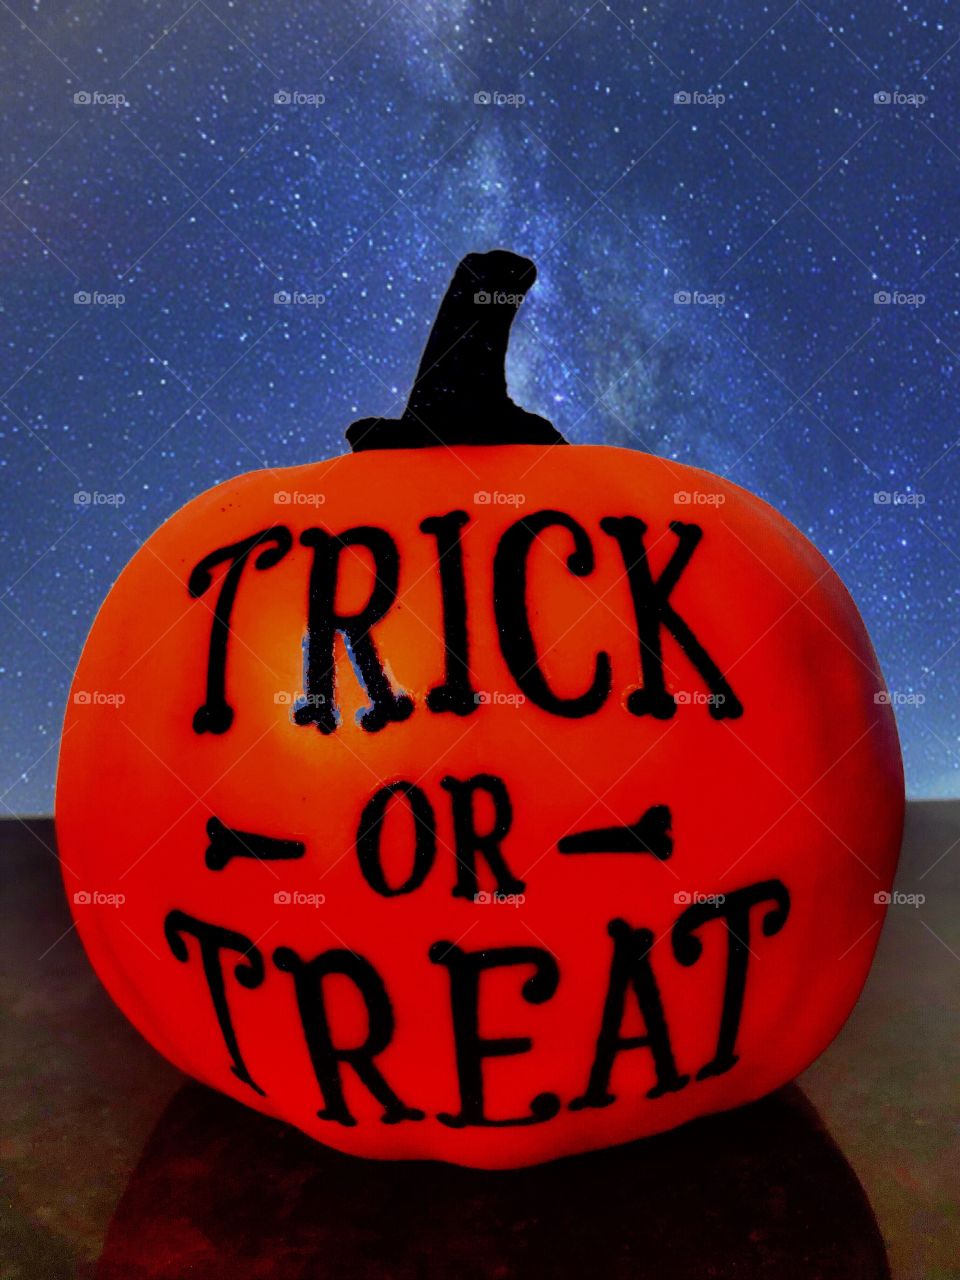 Trick or treat! Pumpkin against a spooky sky. 